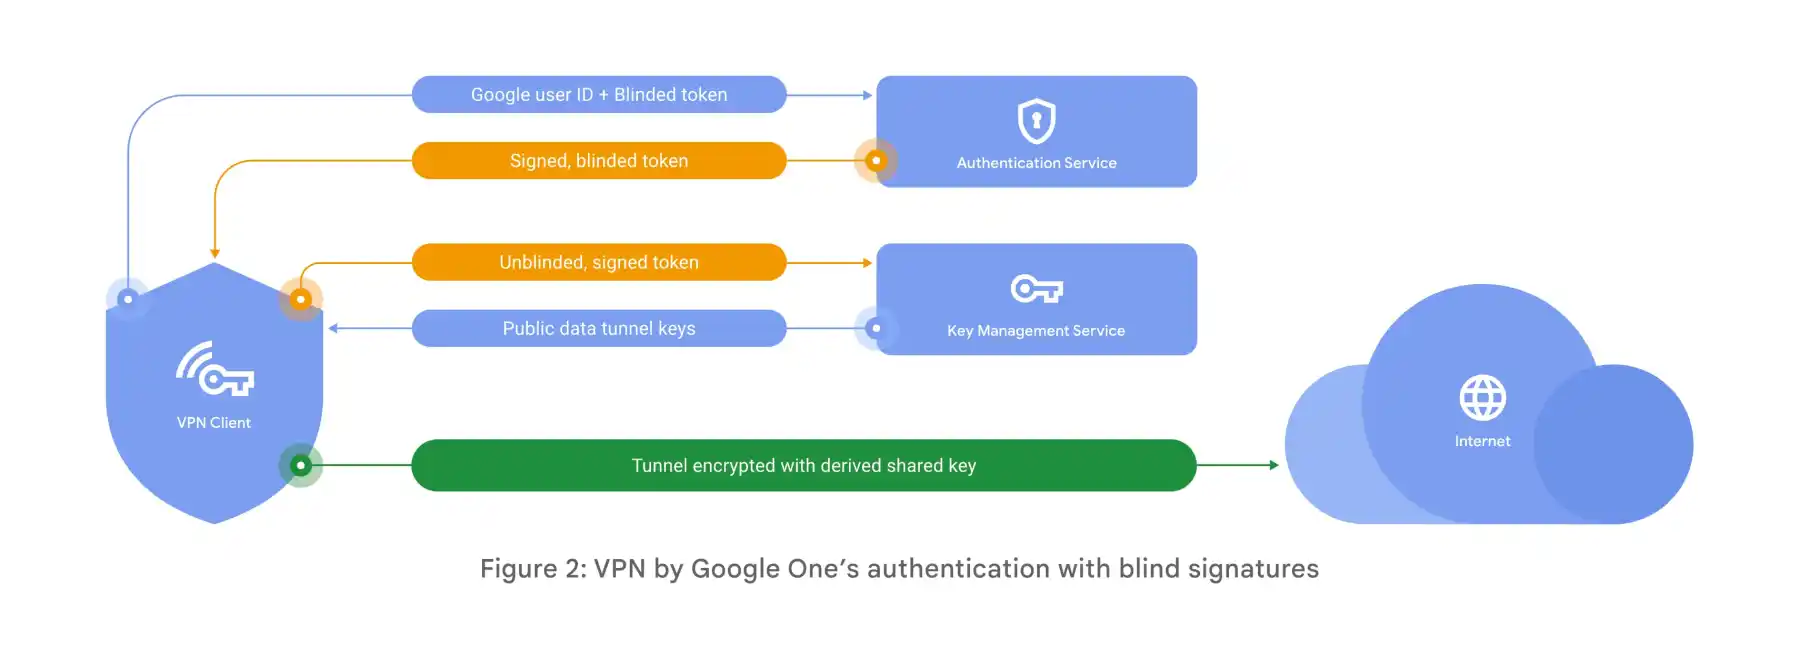 Google One VPN 將停提供服務，因為使用人數太少了